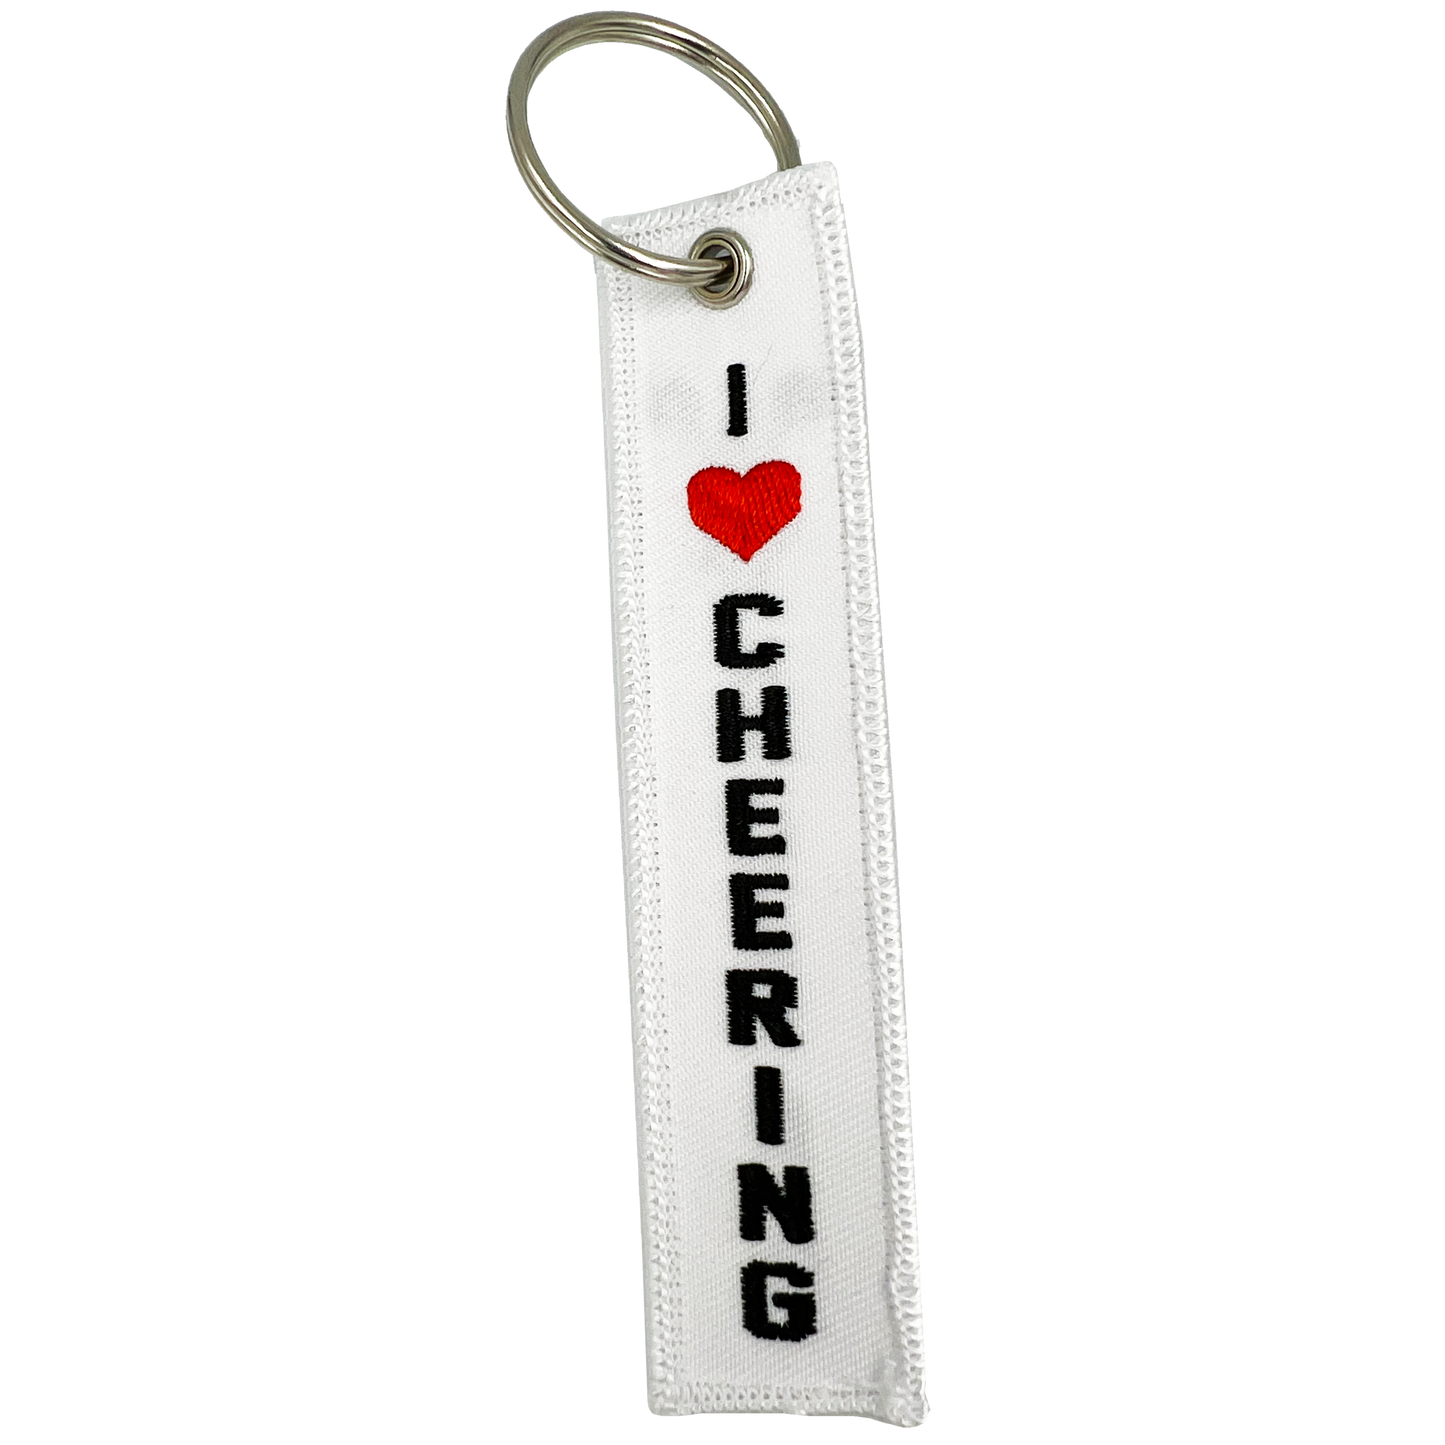 Discontinued GL8-008 Cheerleading Cheer Cheerleader Keychain or Luggage Tag or zipper pull School Spirit